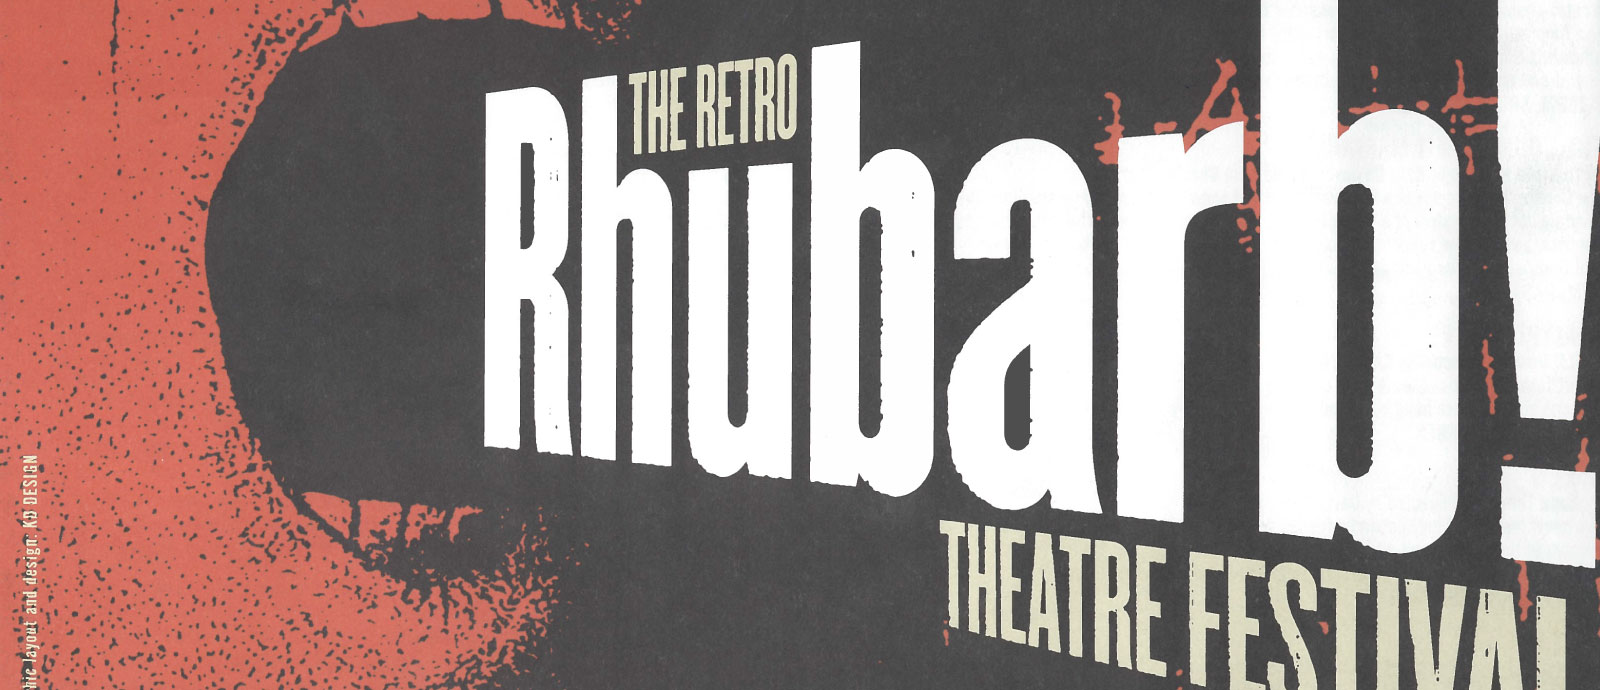 Deborah Laufer Porn - THE RHUBARB ARCHIVE - Buddies in Bad Times TheatreBuddies in ...